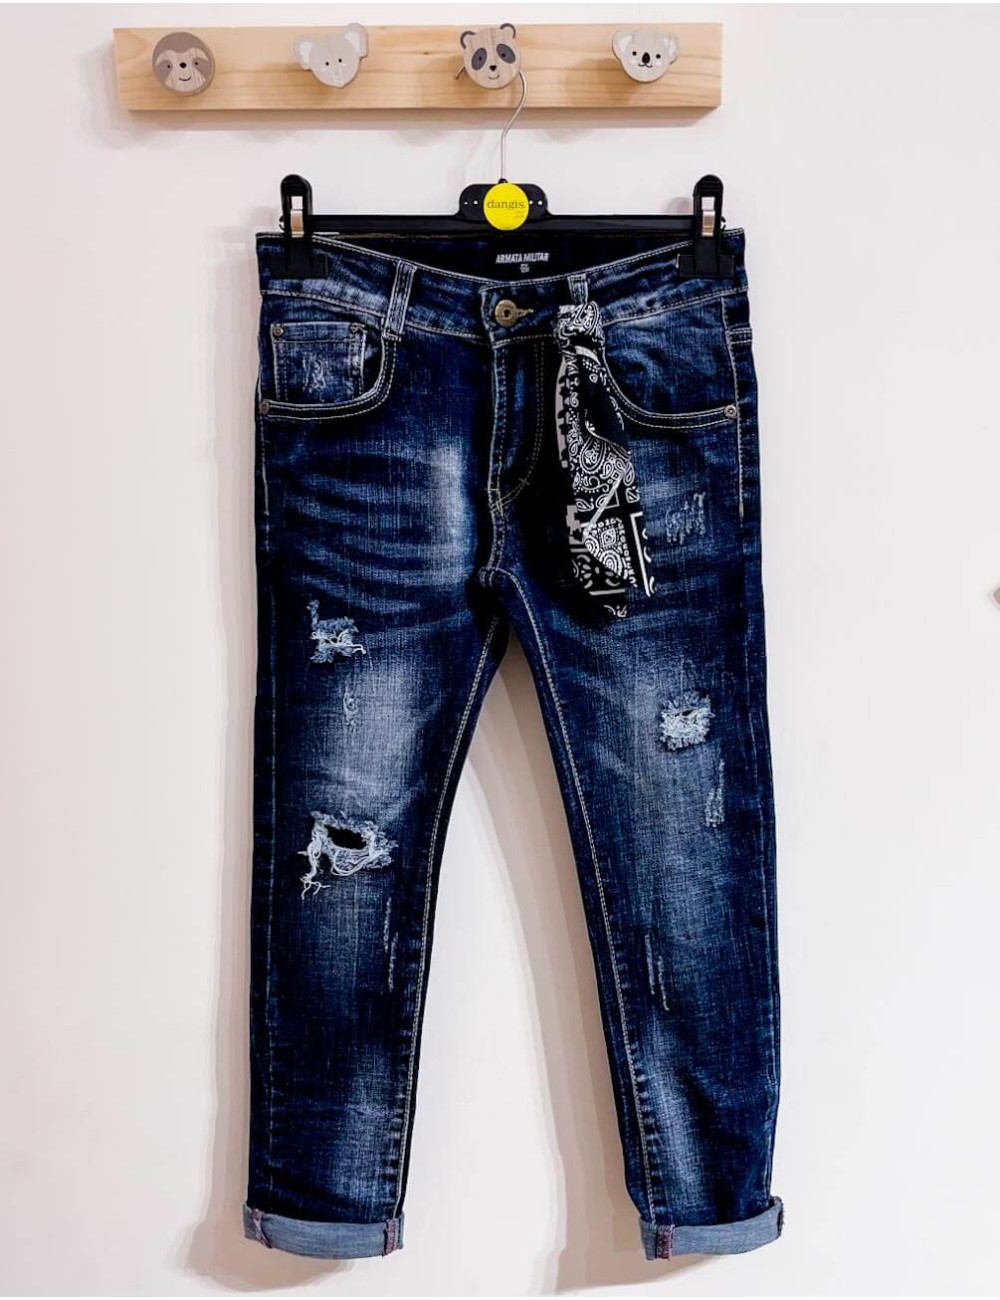 Jeans Bandana-1-dangis